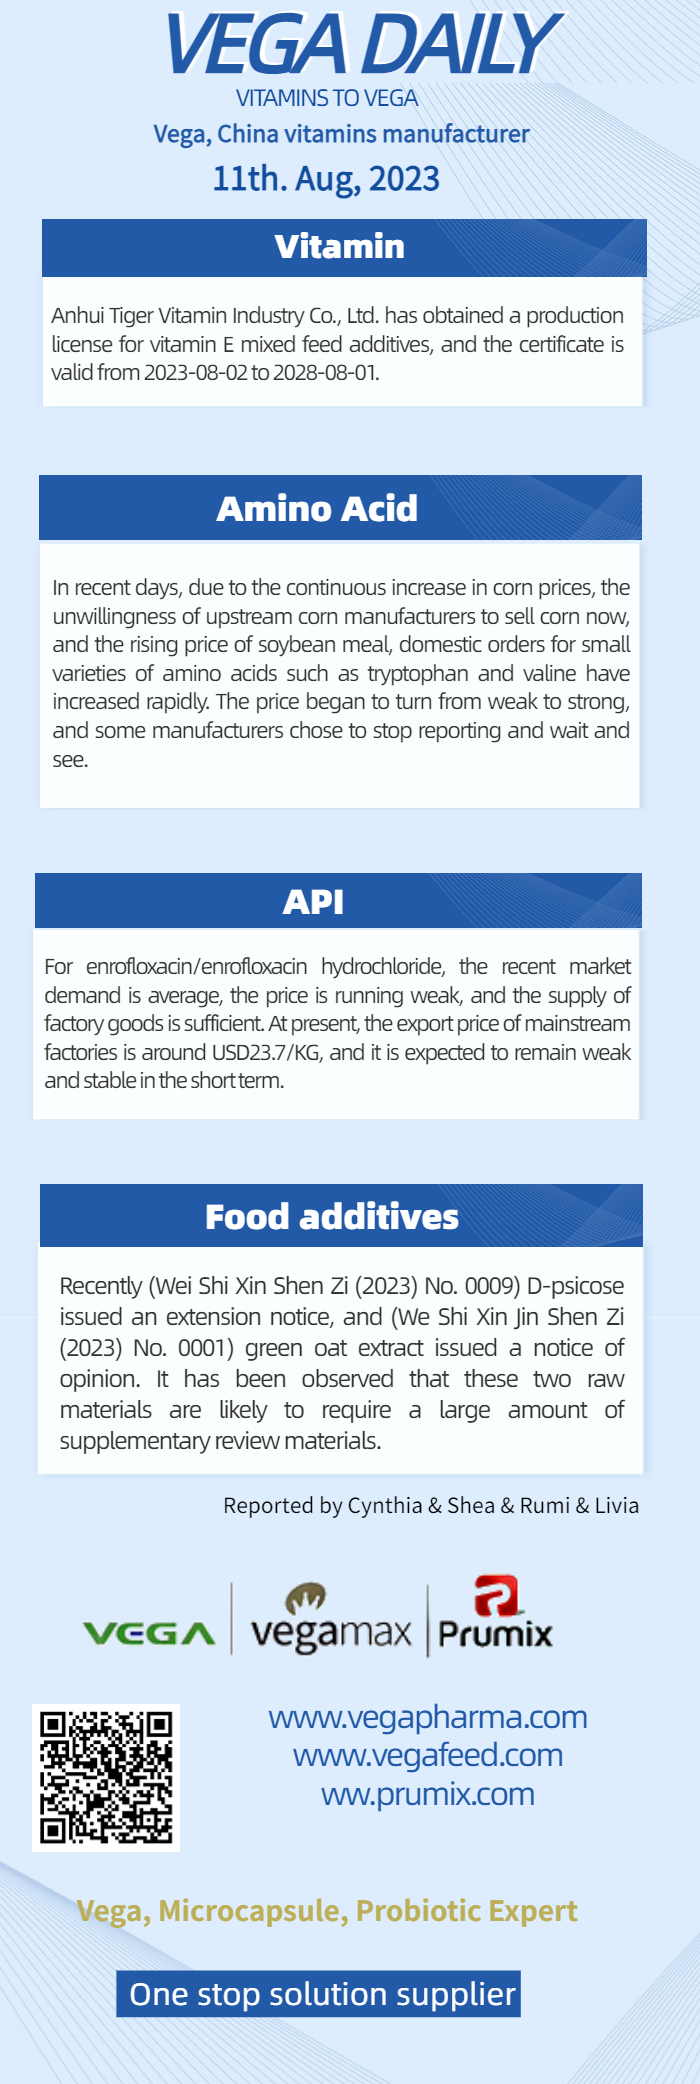 Vega Daily Dated on August  11th 2023 Vitamin Amino Acid API Food Additives.jpg